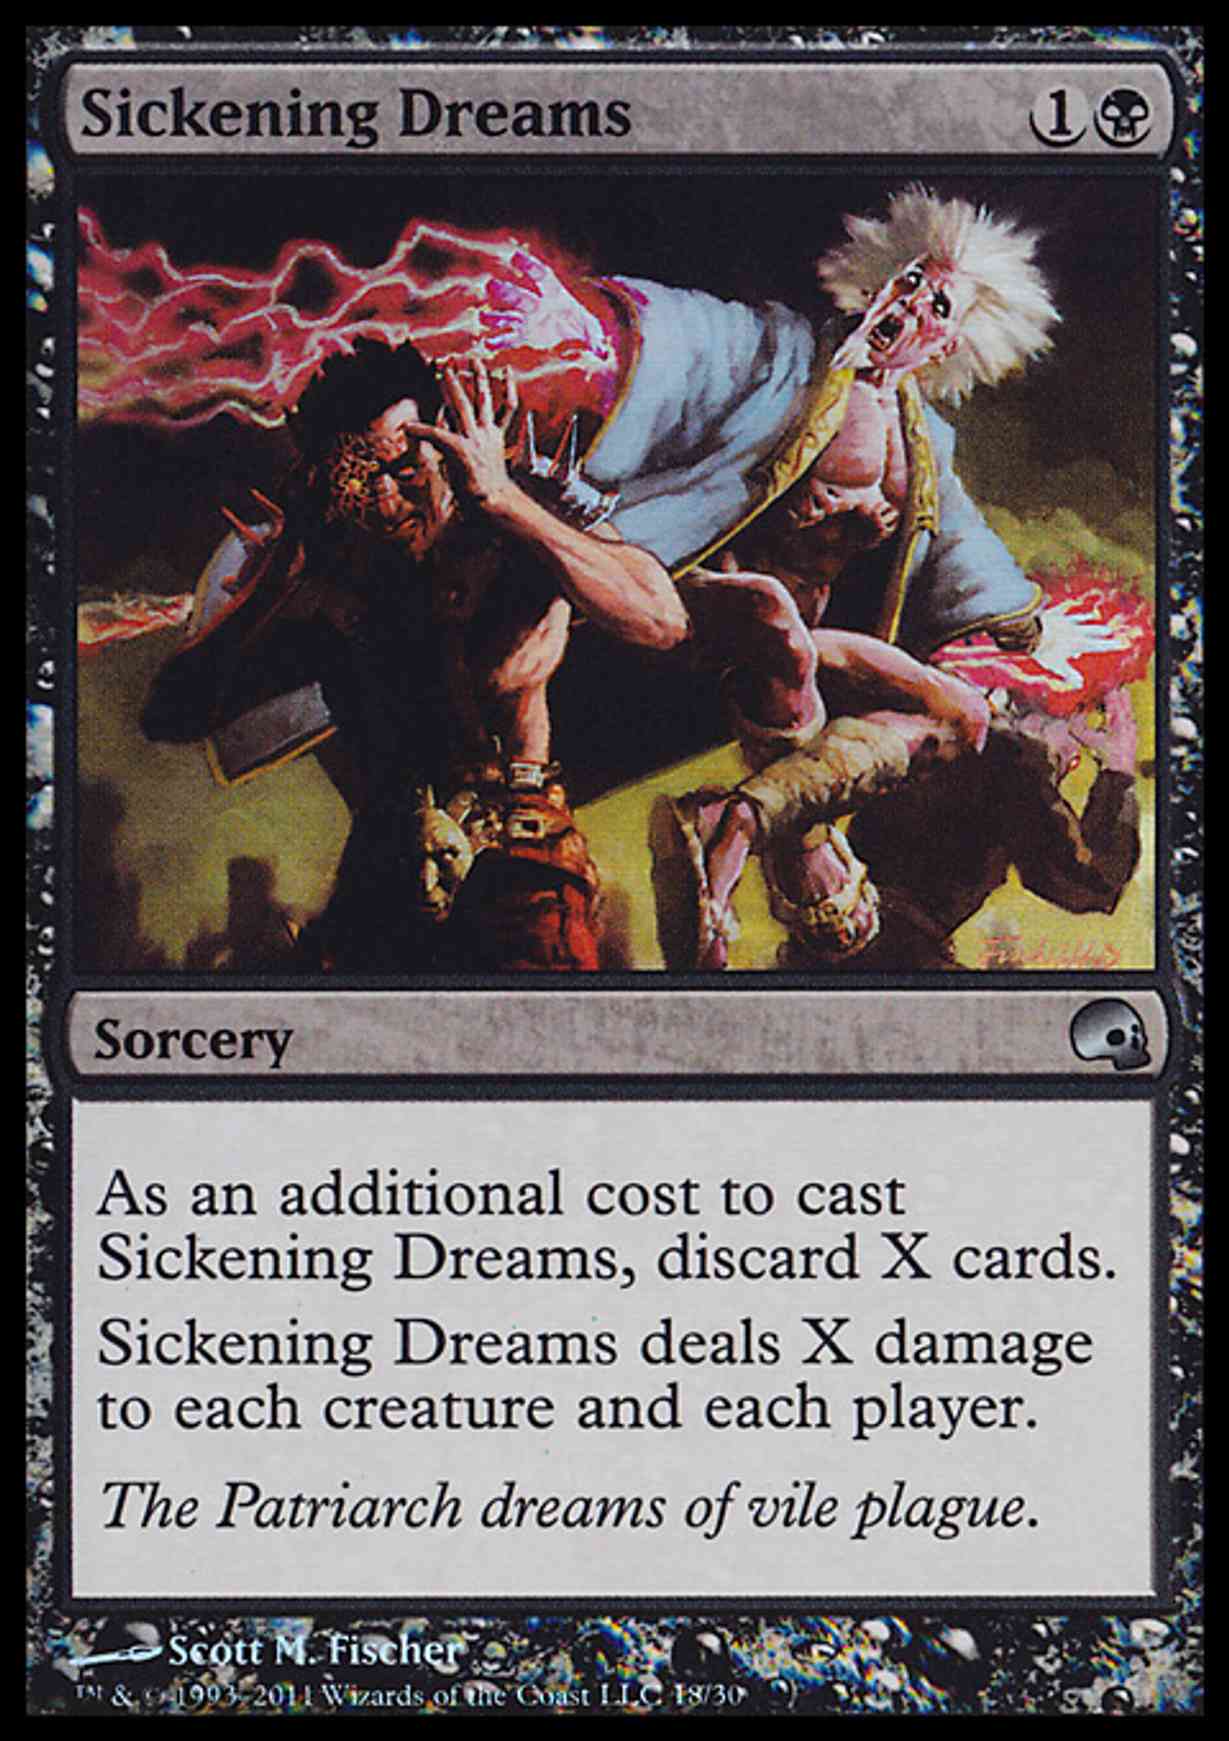 Sickening Dreams magic card front